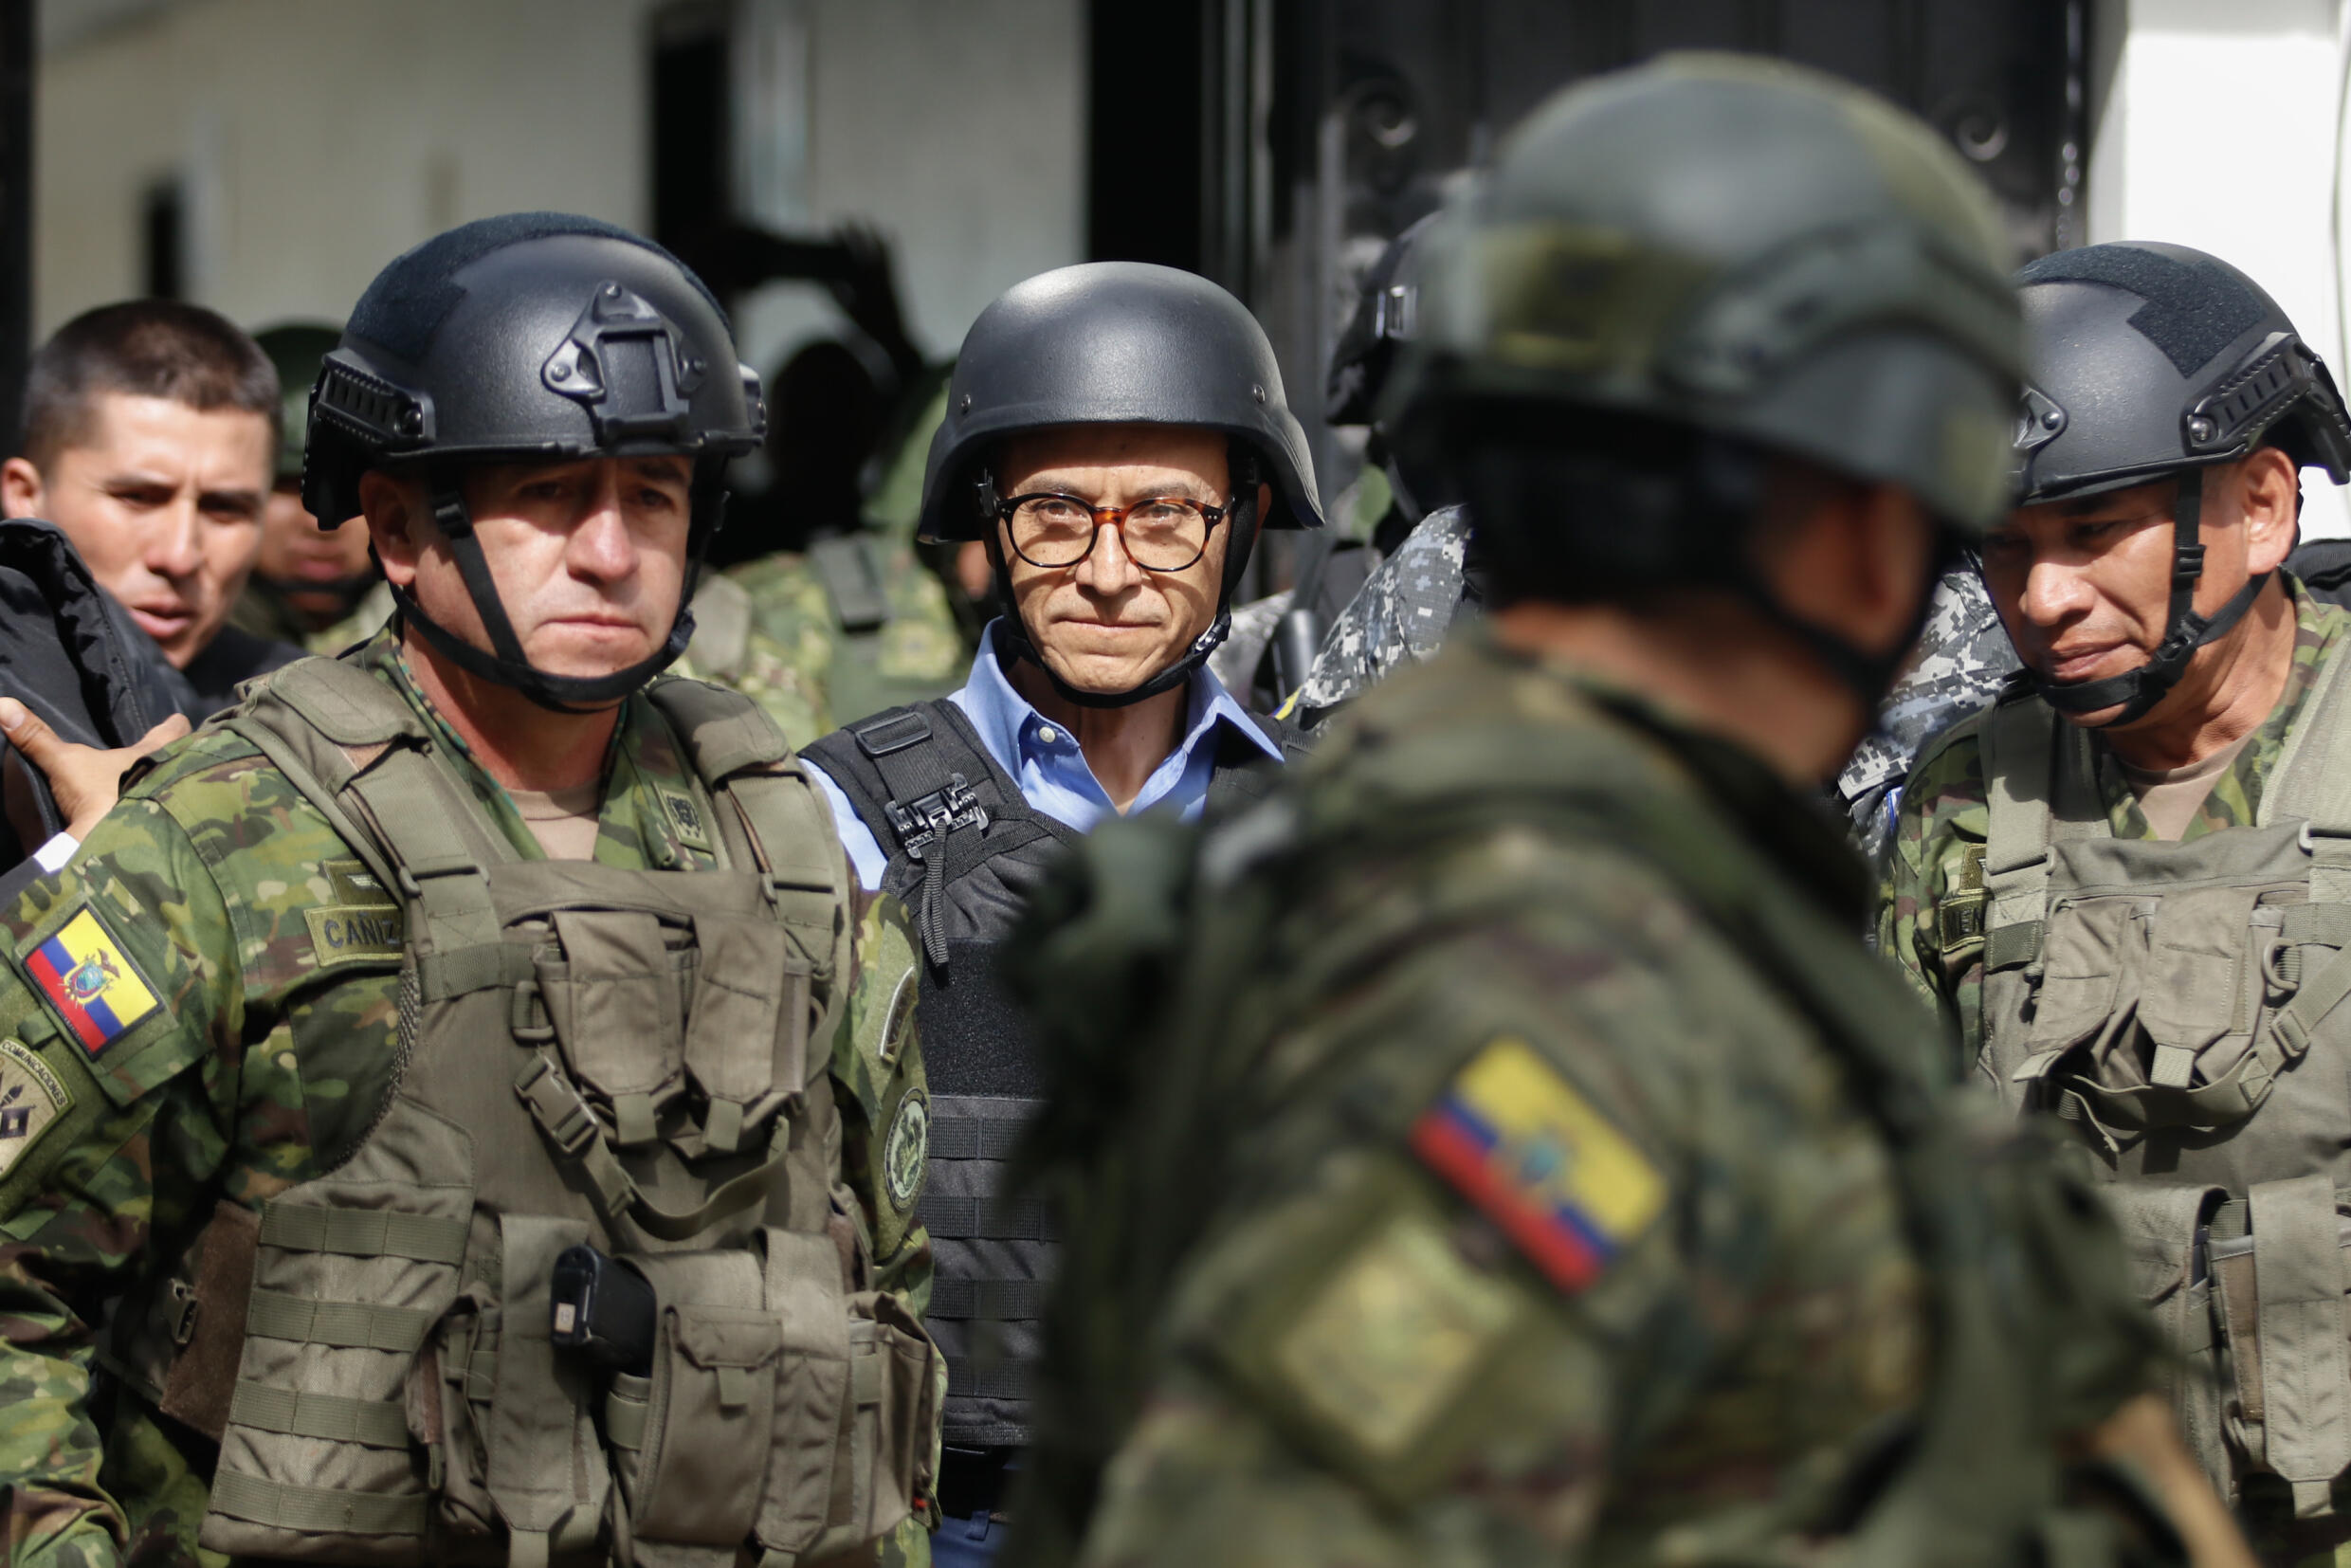 Ecuadoran presidential candidate Christian Zurita goes to vote in a bulletproof vest and helmet